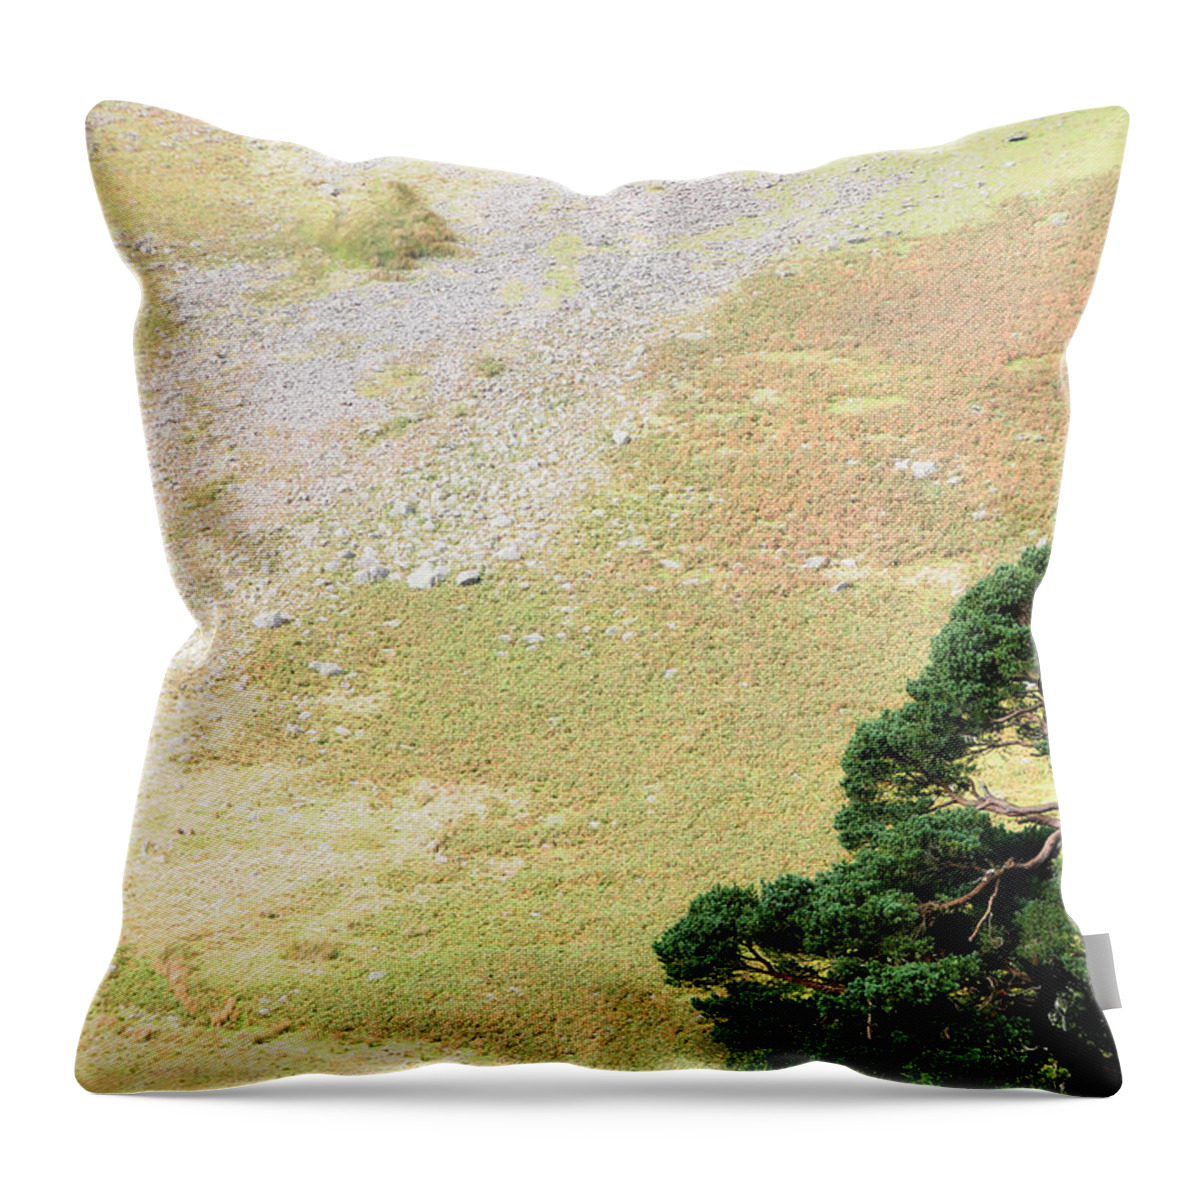 Ireland Throw Pillow featuring the photograph Stillness. Wicklow Mountains. Ireland by Jenny Rainbow